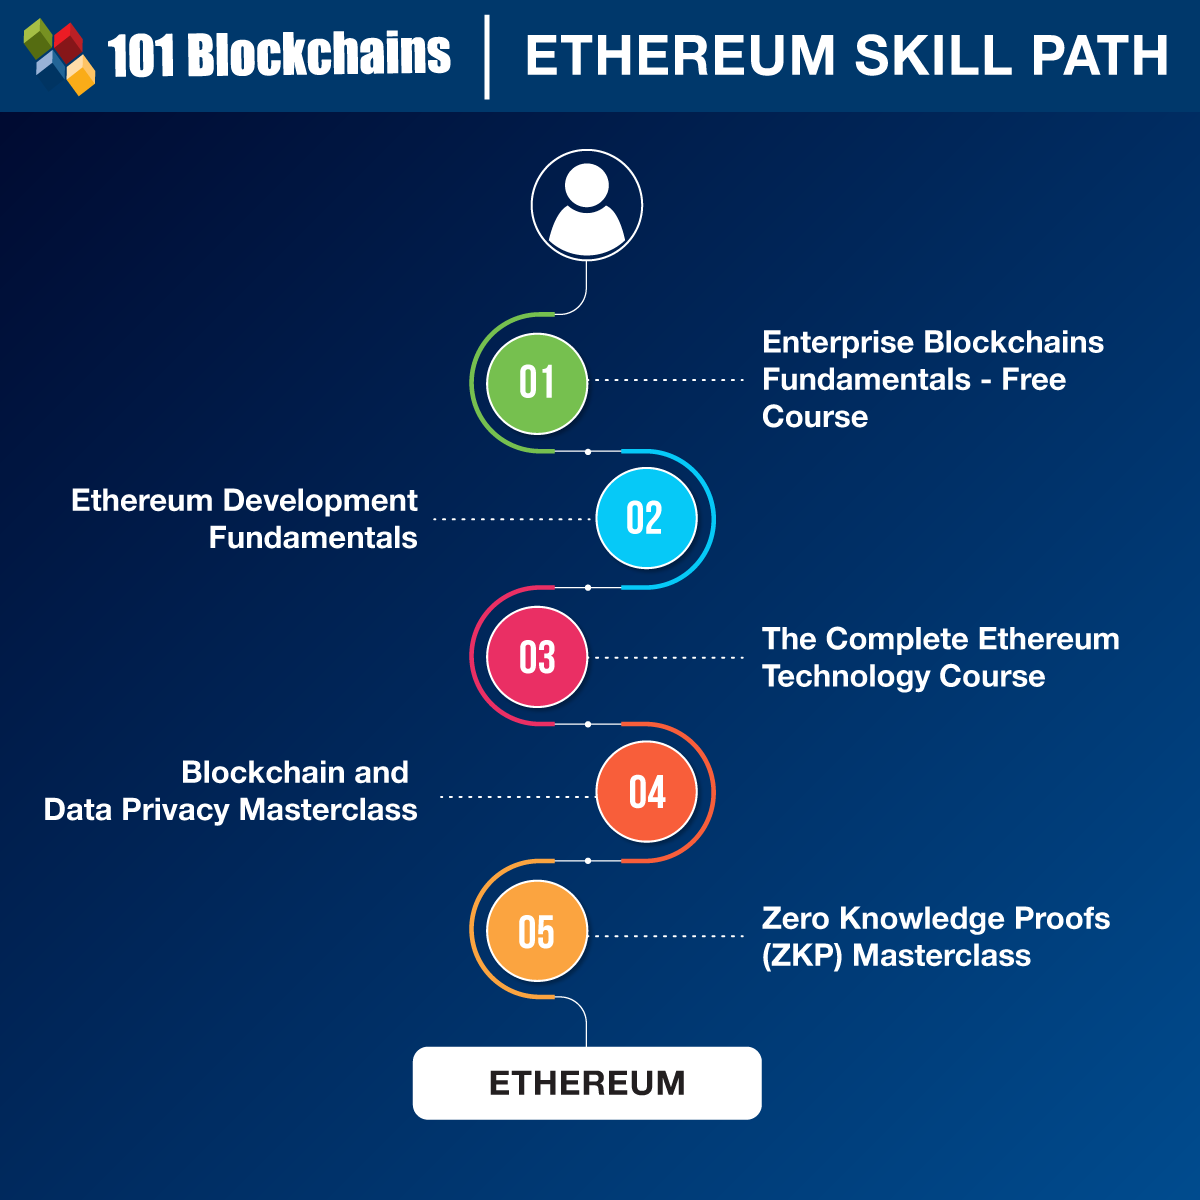 Ethereum Skill Path